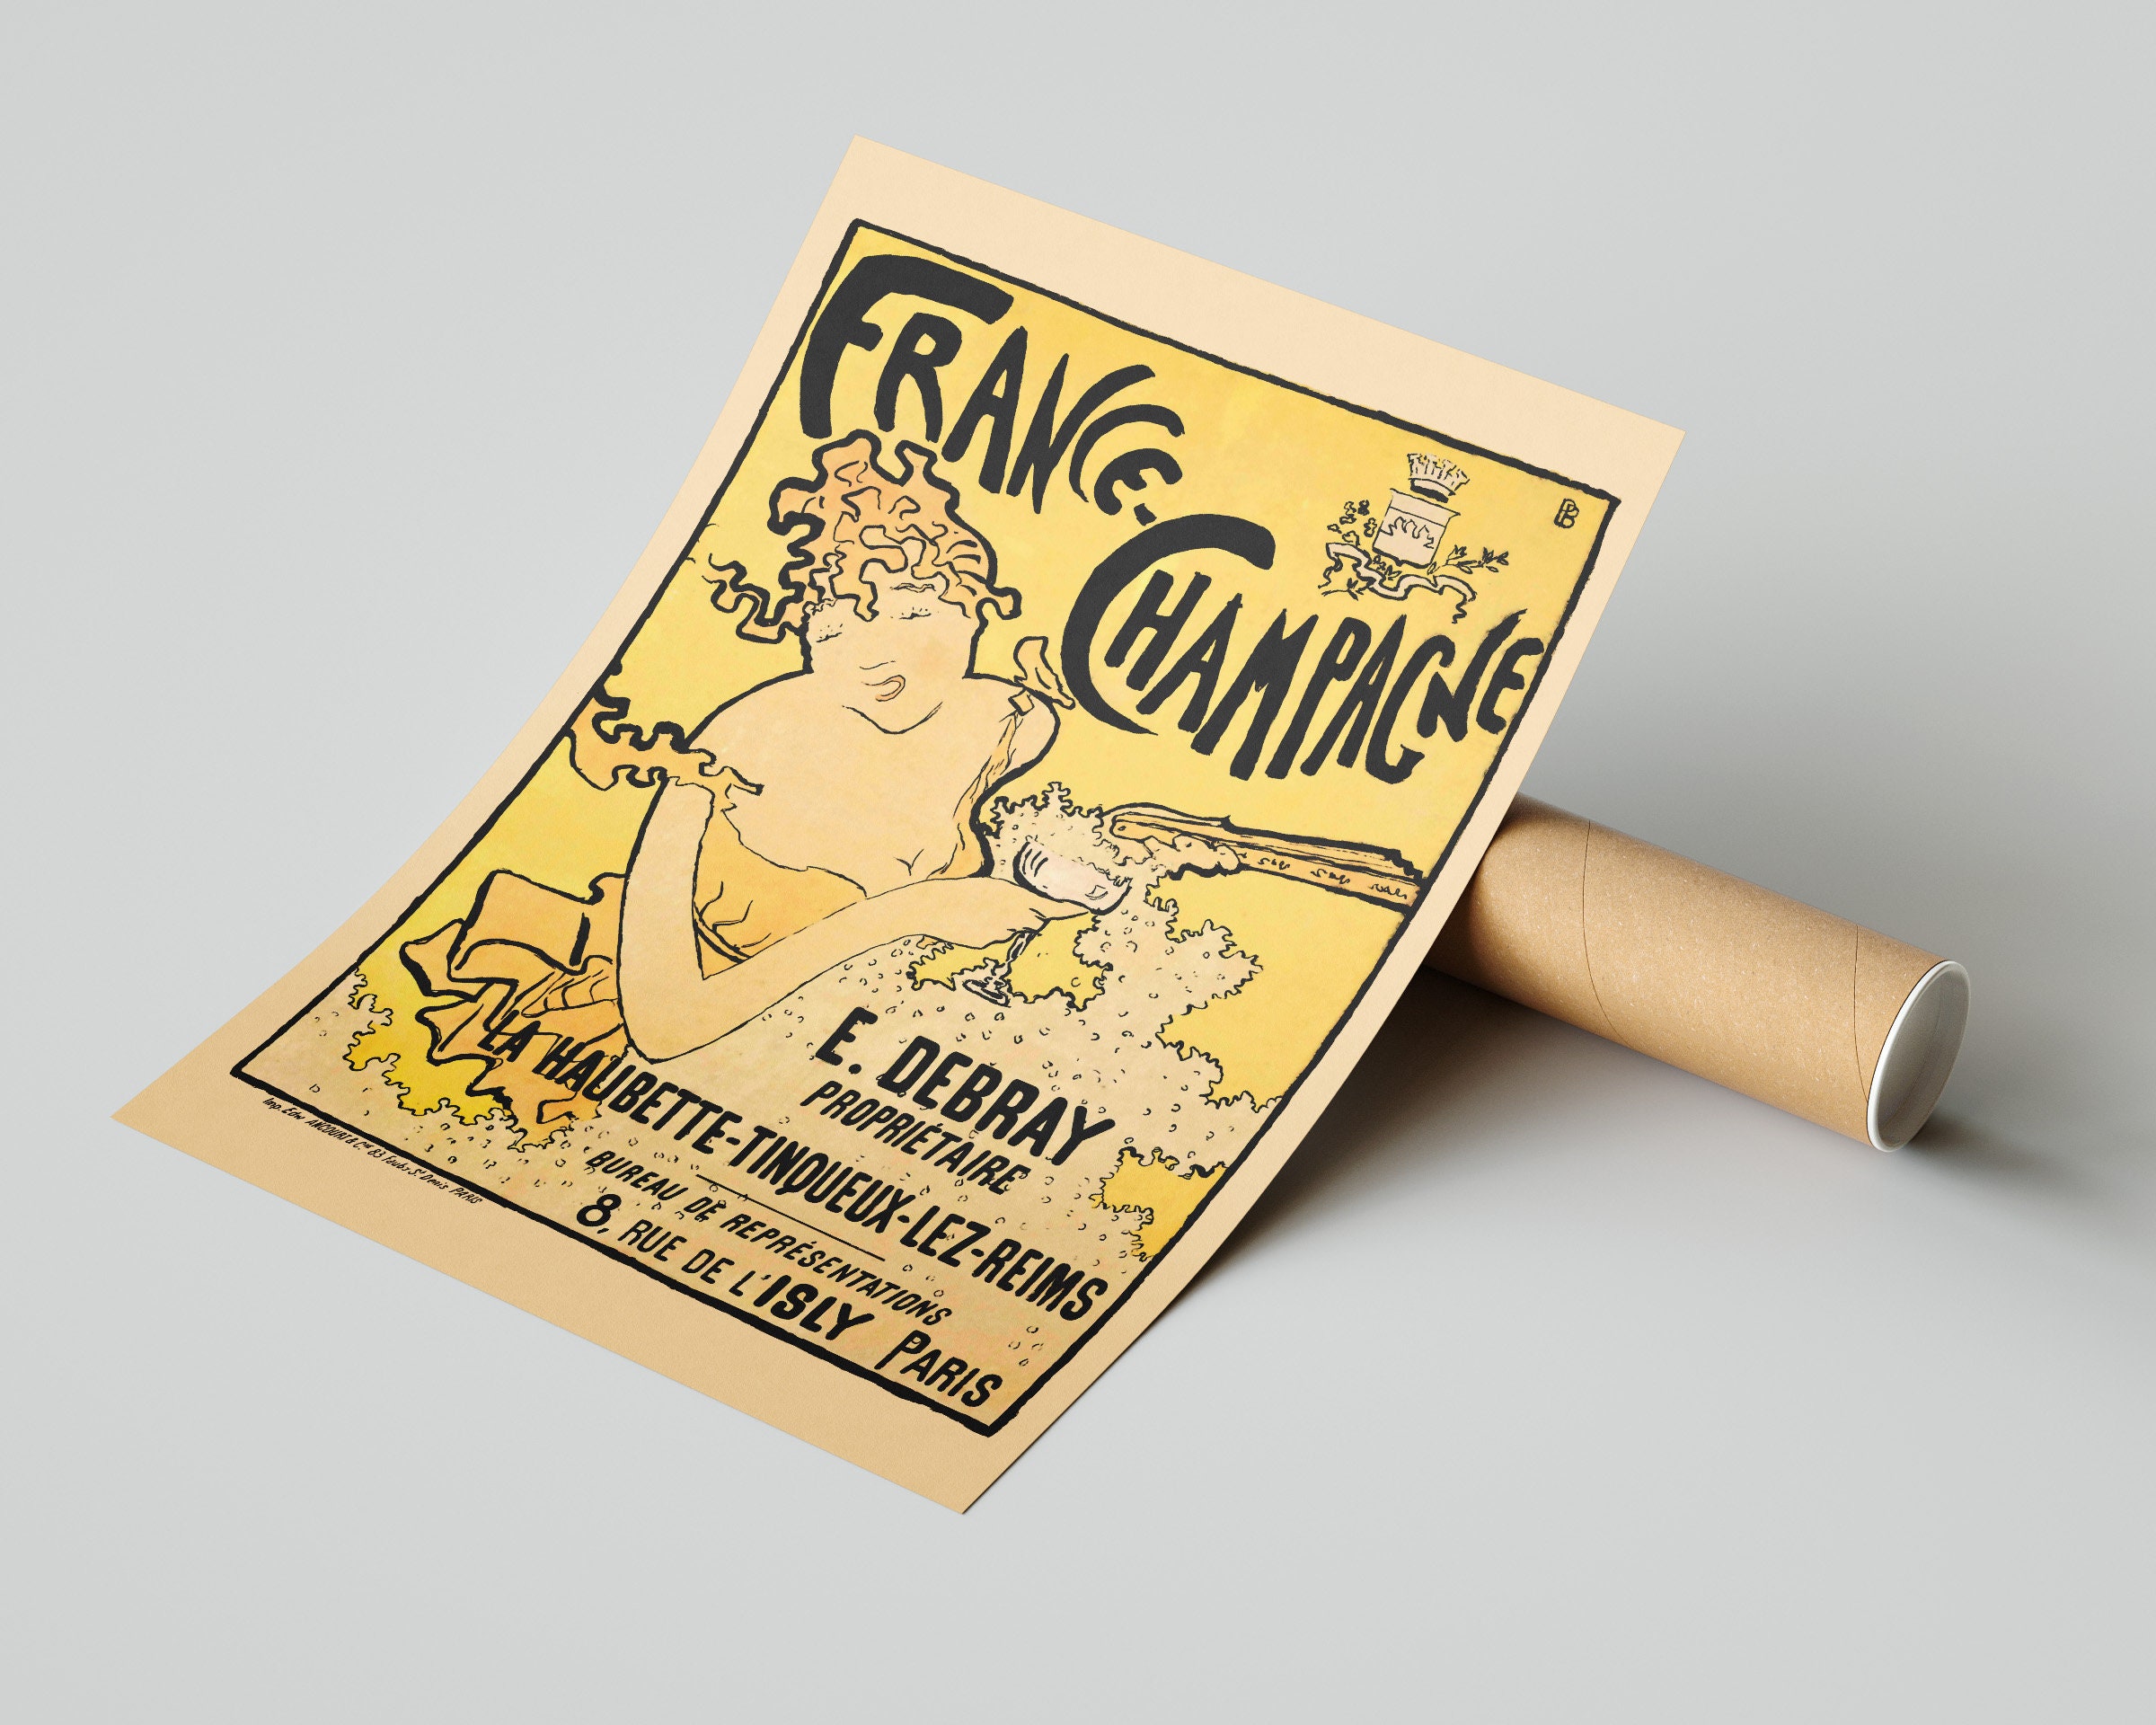 France Champagne (Vintage Alcohol Ad Poster) - Pierre Bonnard